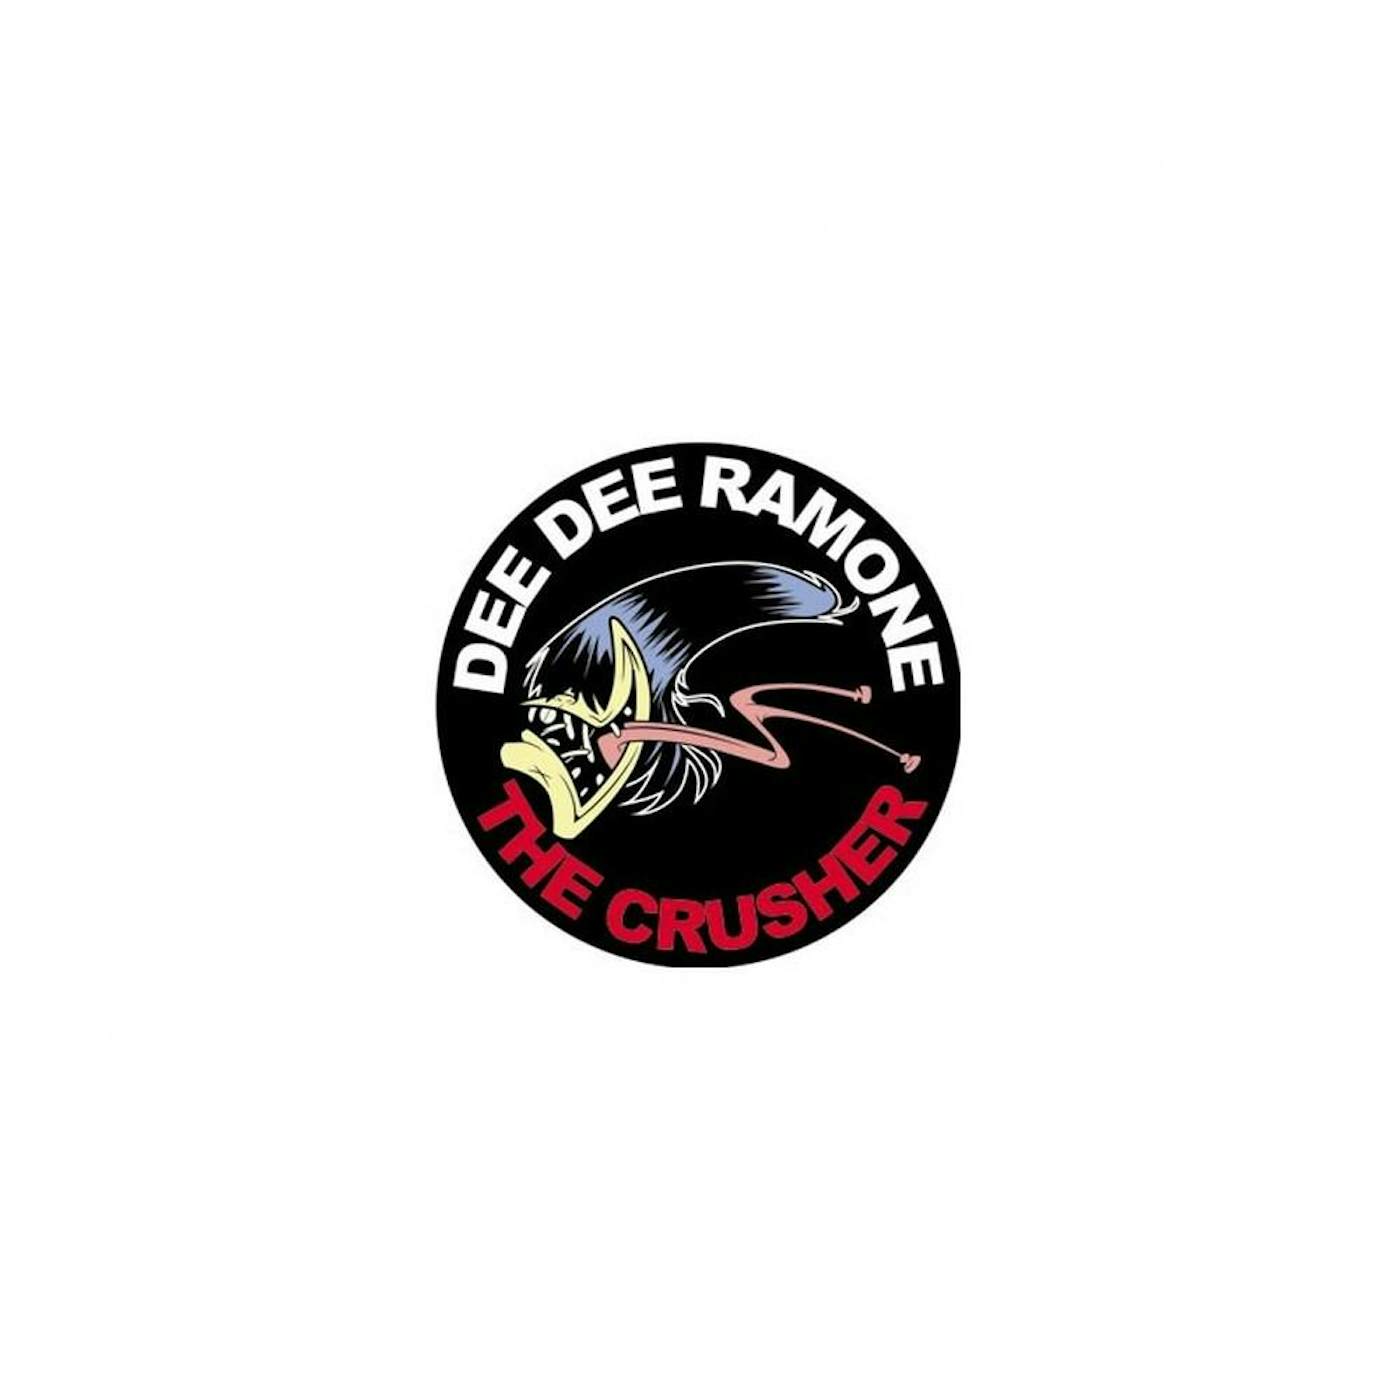 Dee Dee Ramone Crusher Button